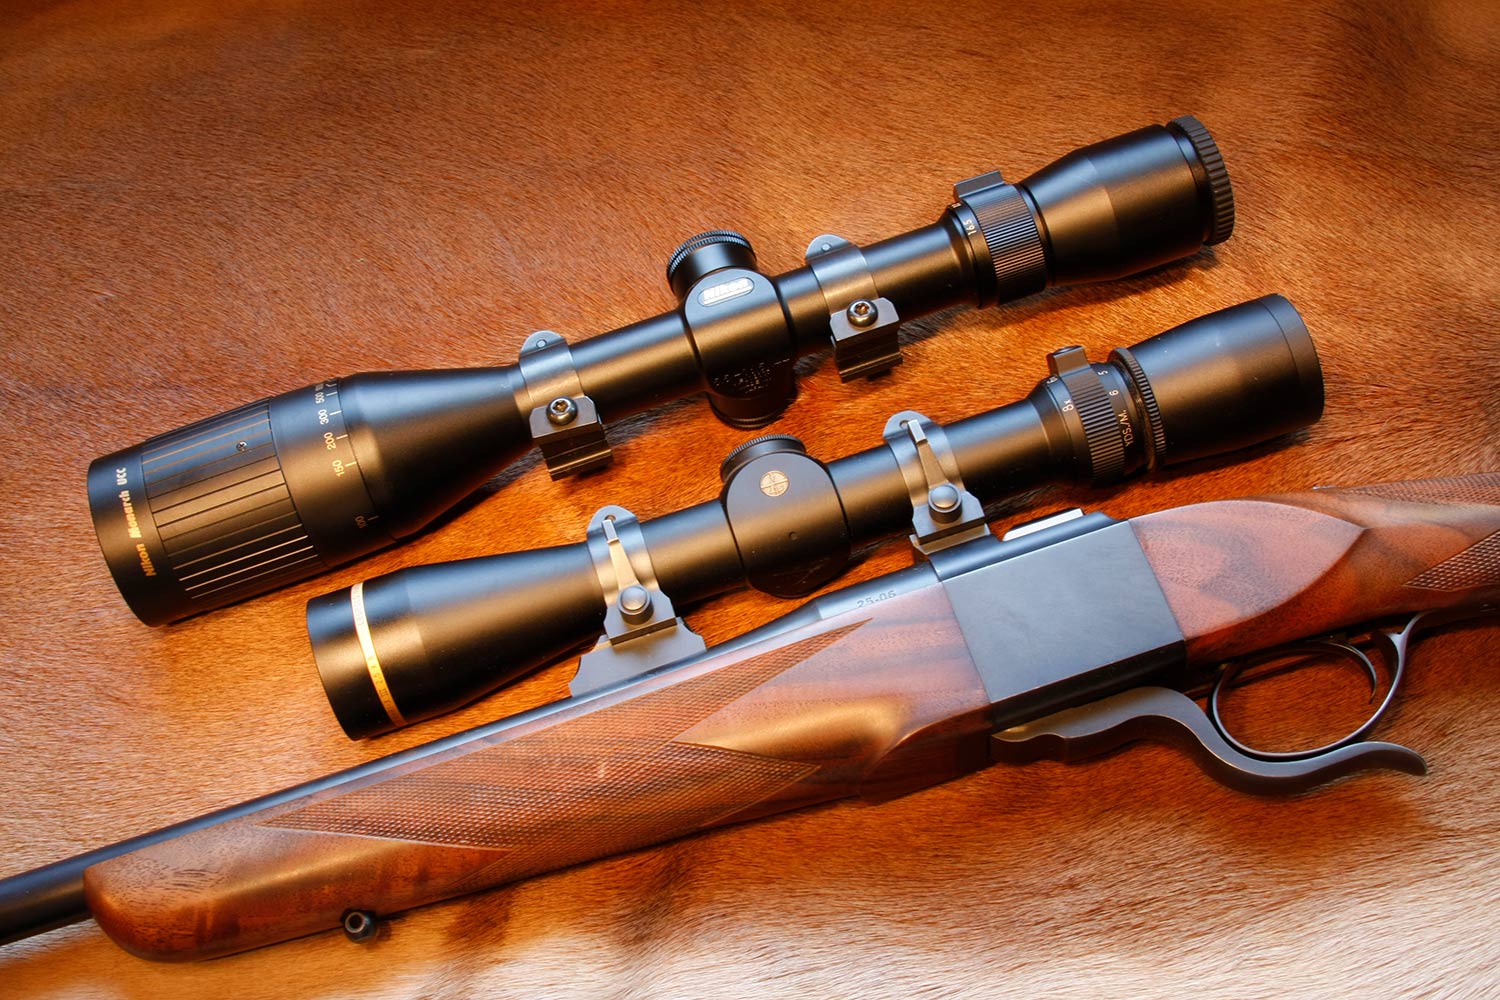 A Leupold riflescope on a Dakota rifle.